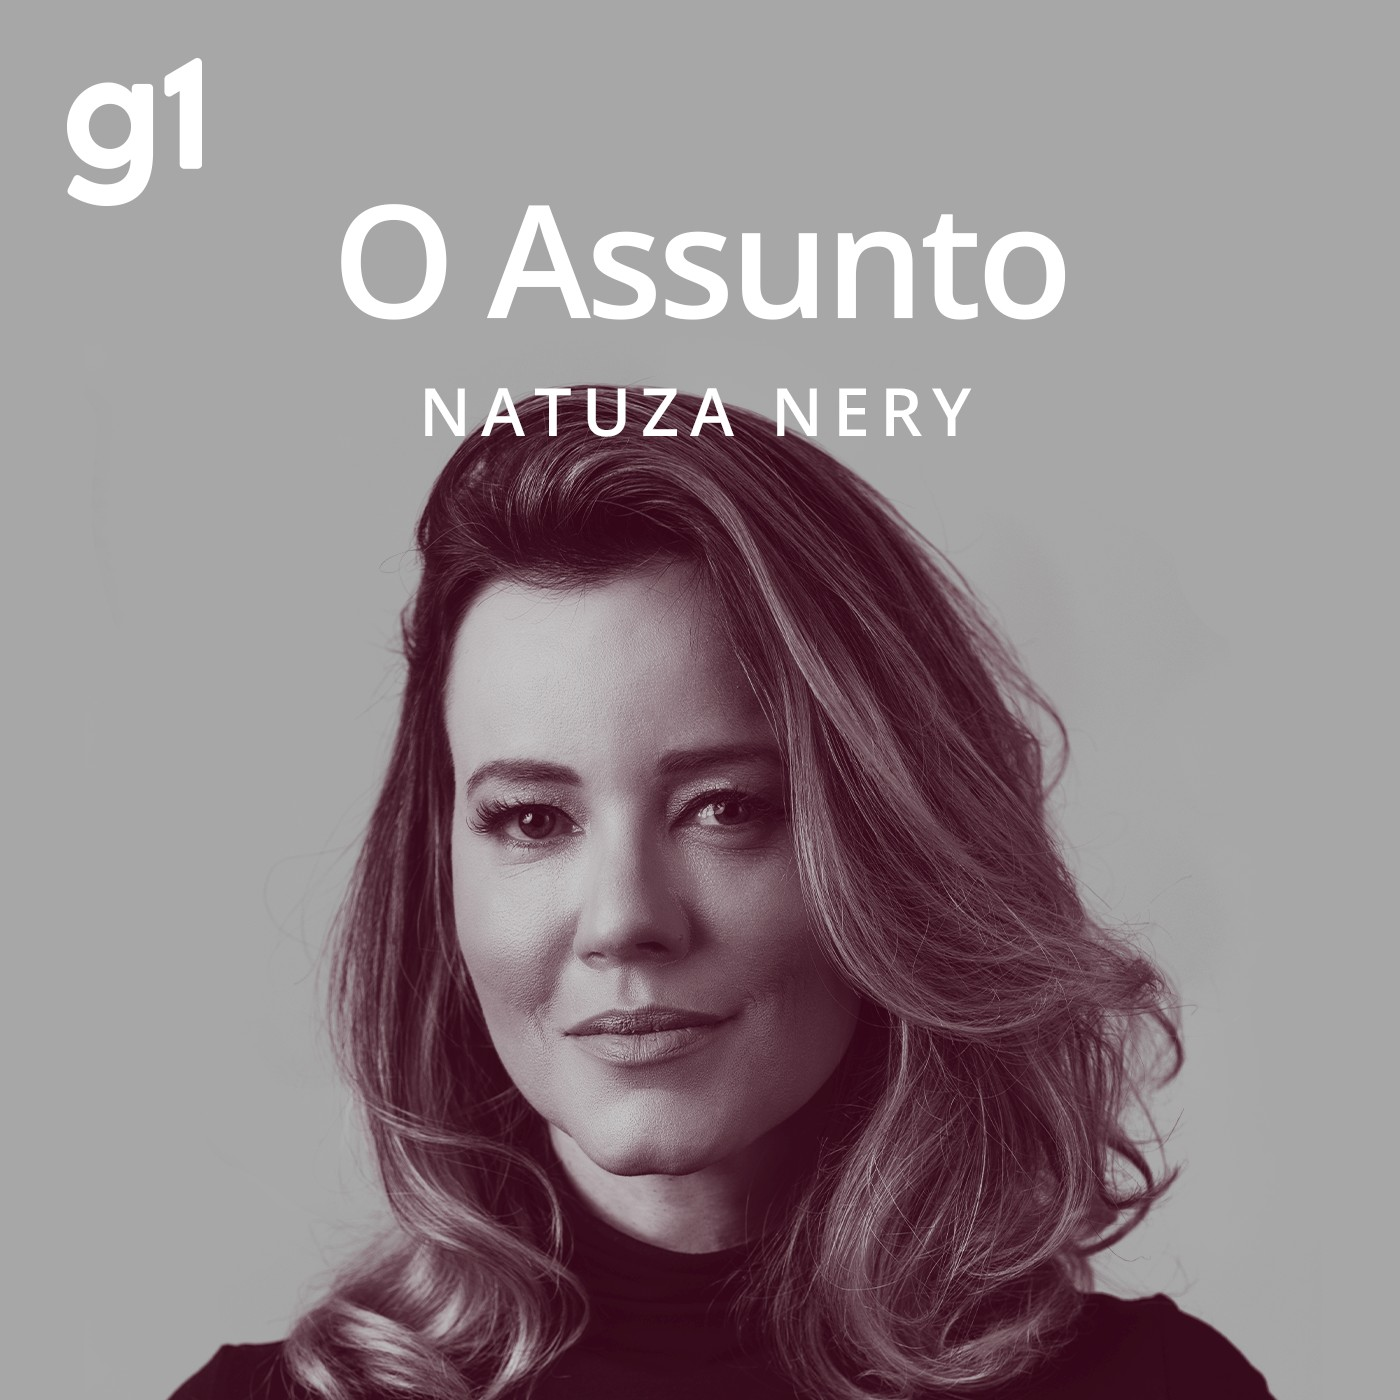 Anti-Mariana Godoy: após críticas de jornalista a Bolsonaro